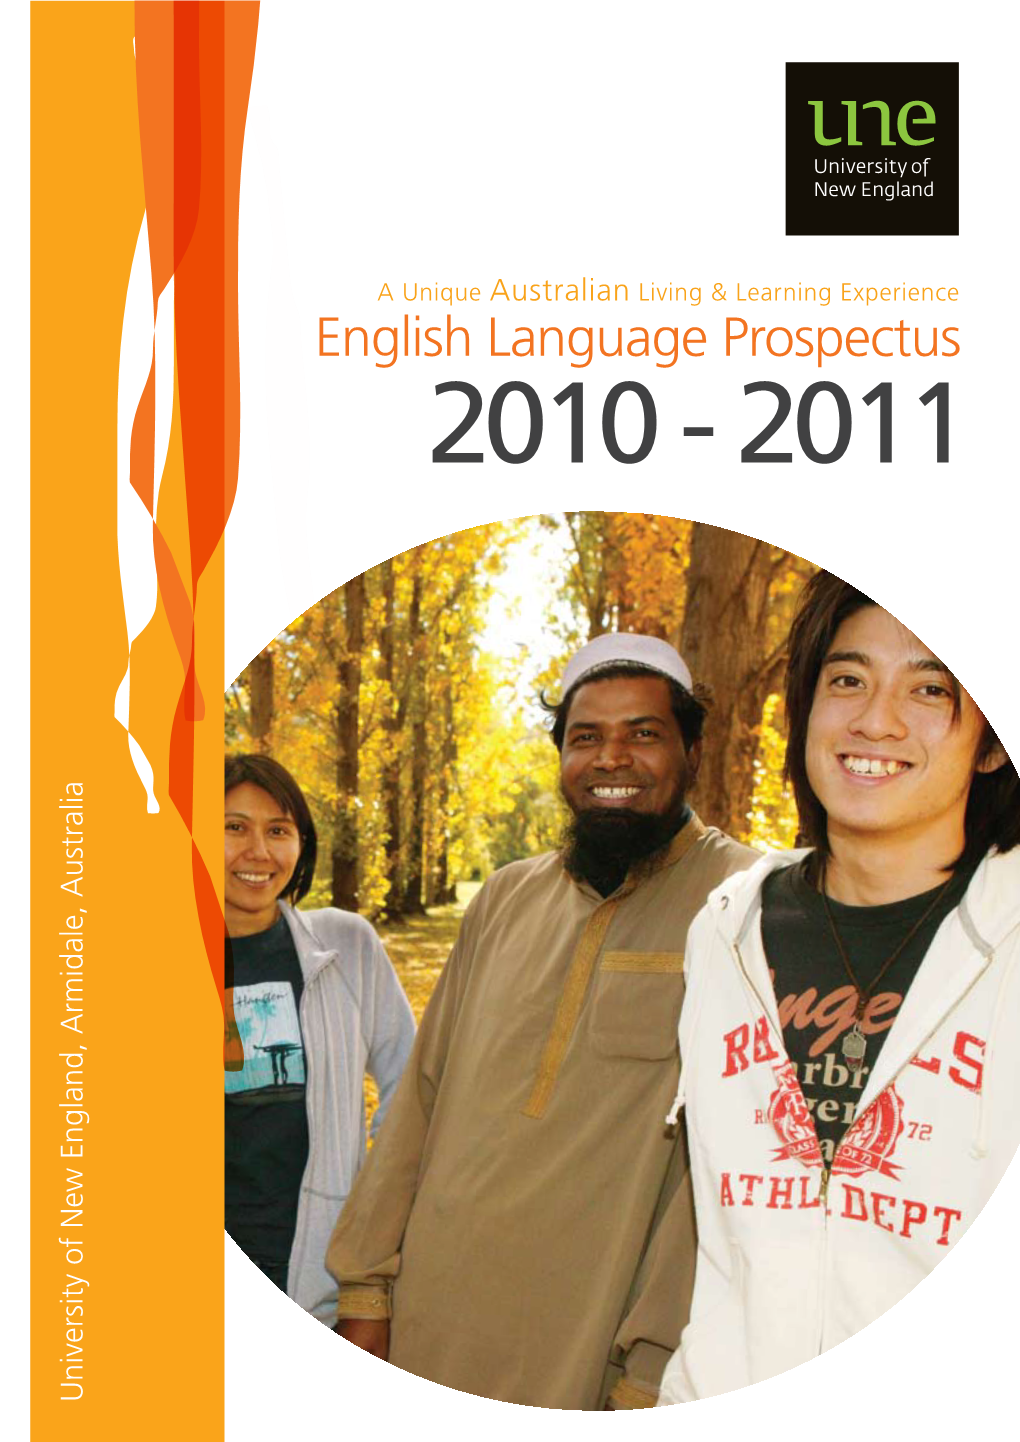 English Language Prospectus 2010 - 2011 University of New England, Armidale, Australia Contents